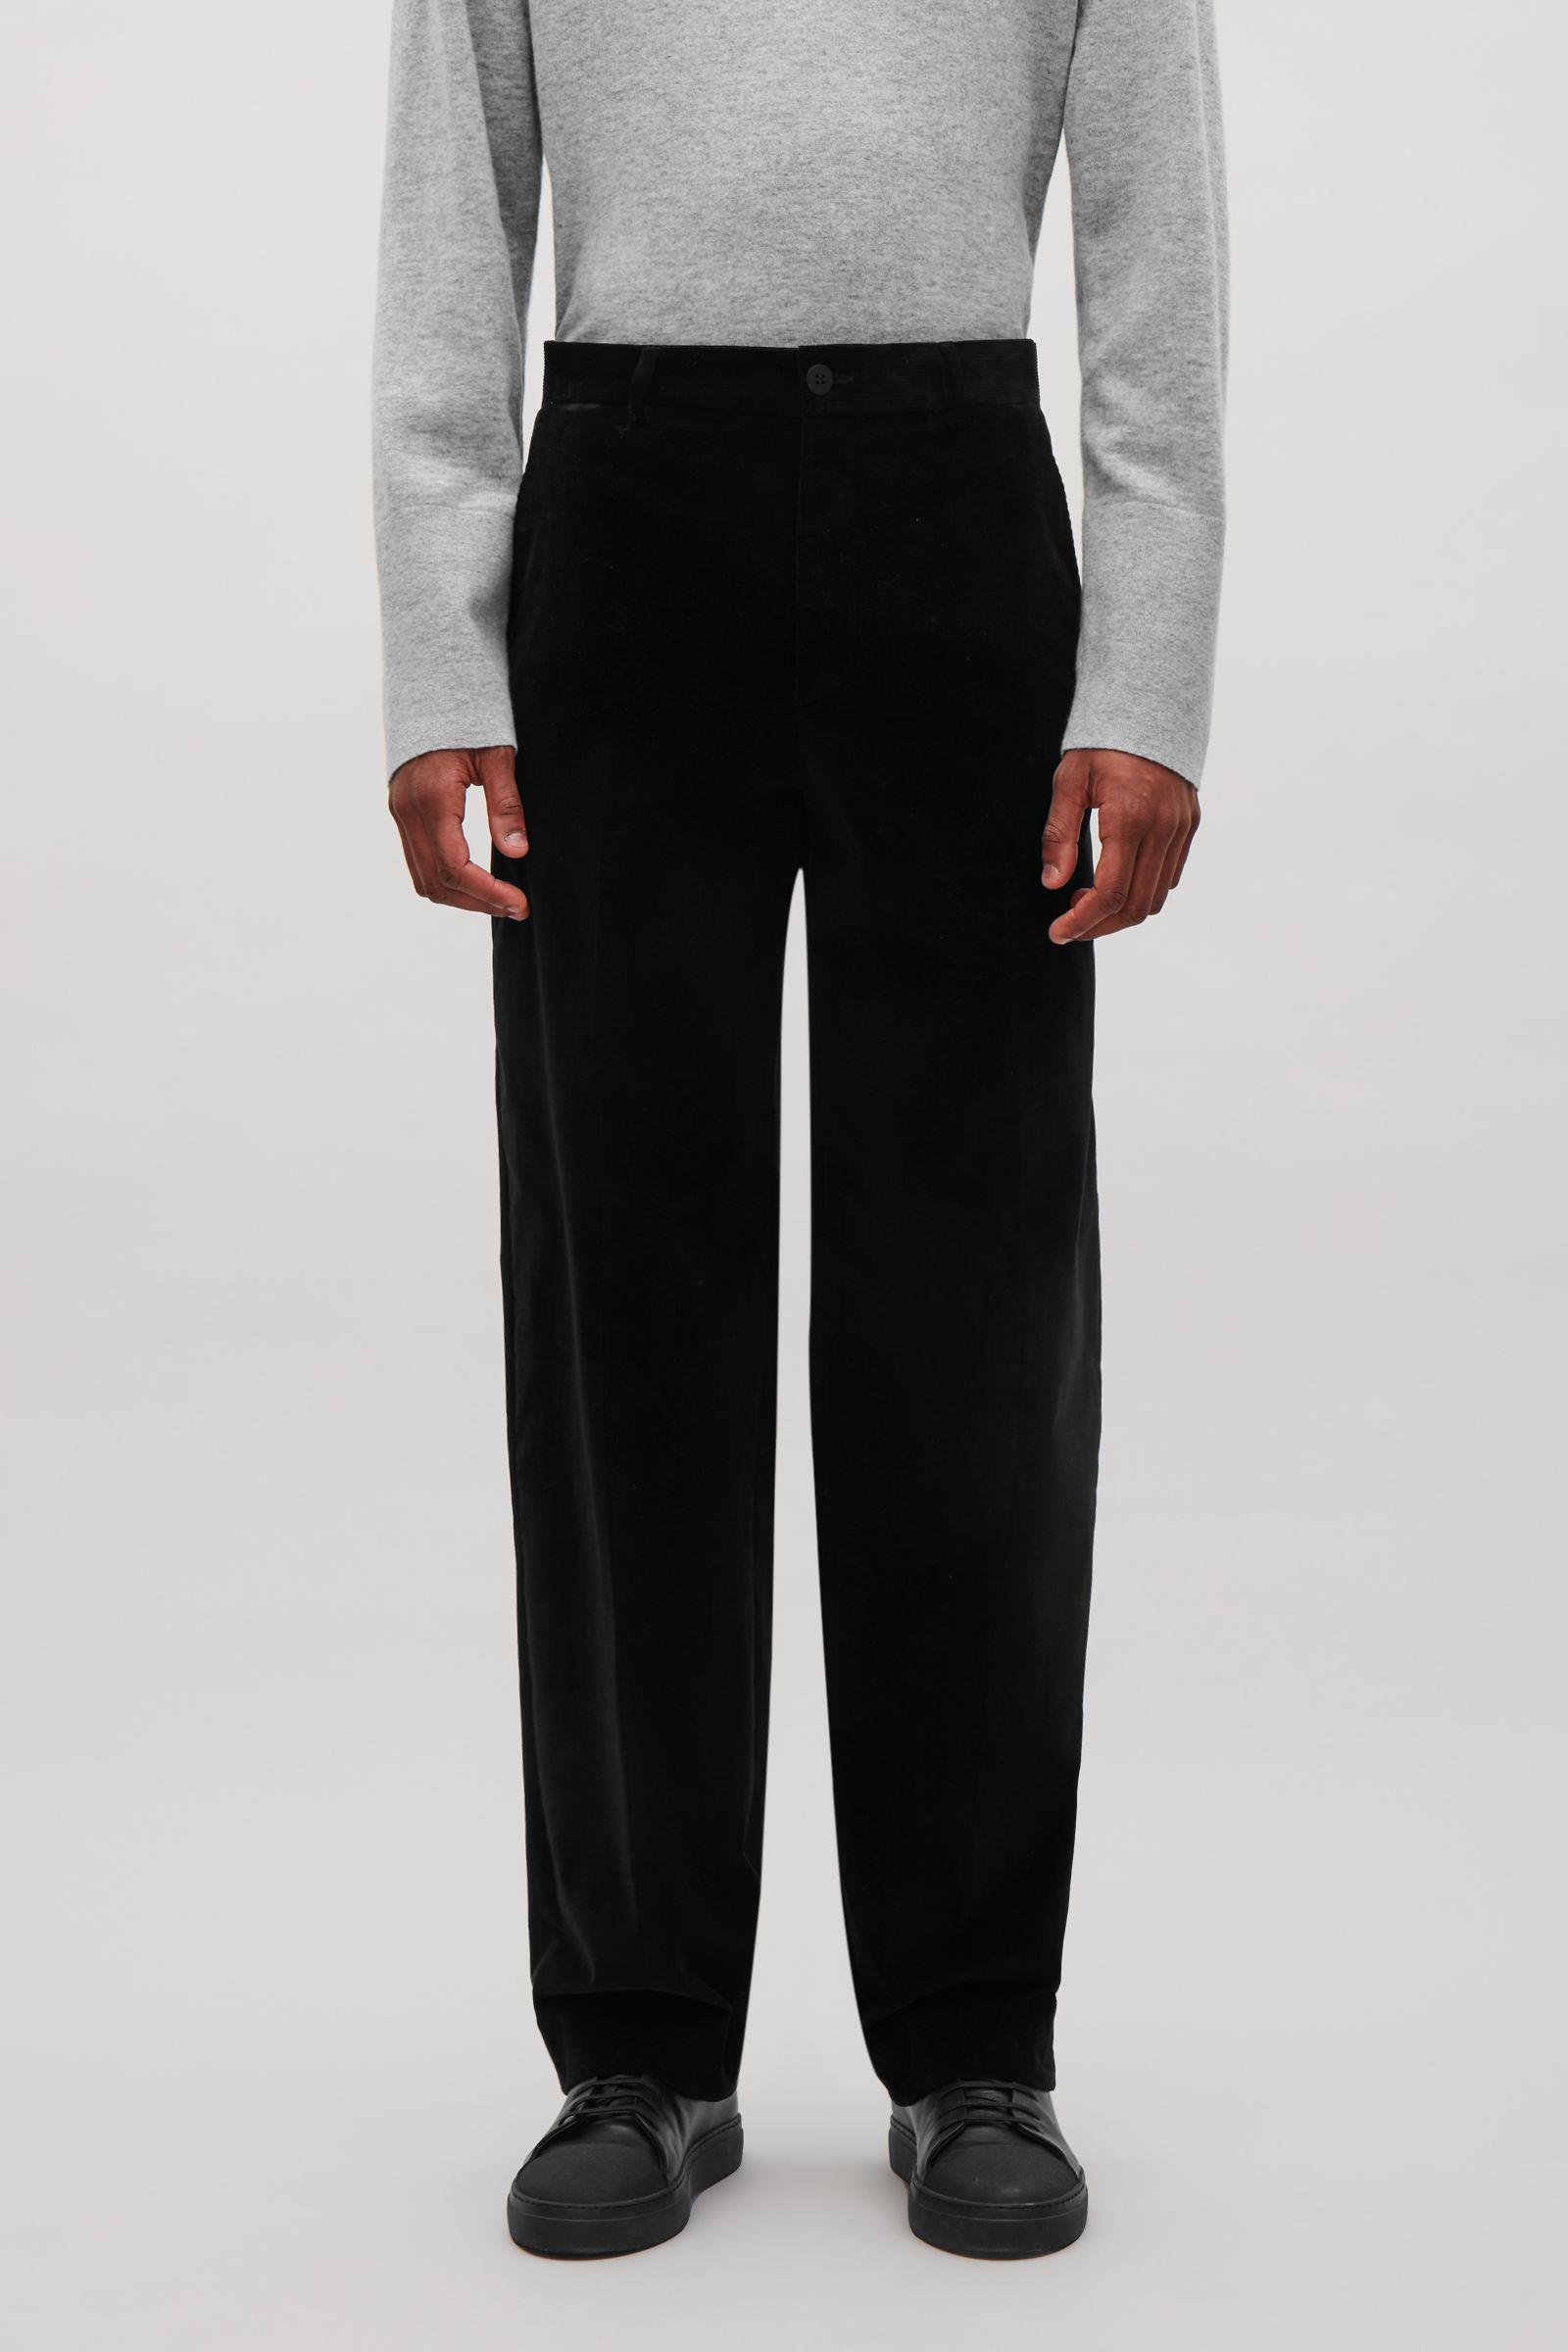 COS Wide-leg Corduroy Trousers in Black for Men - Lyst